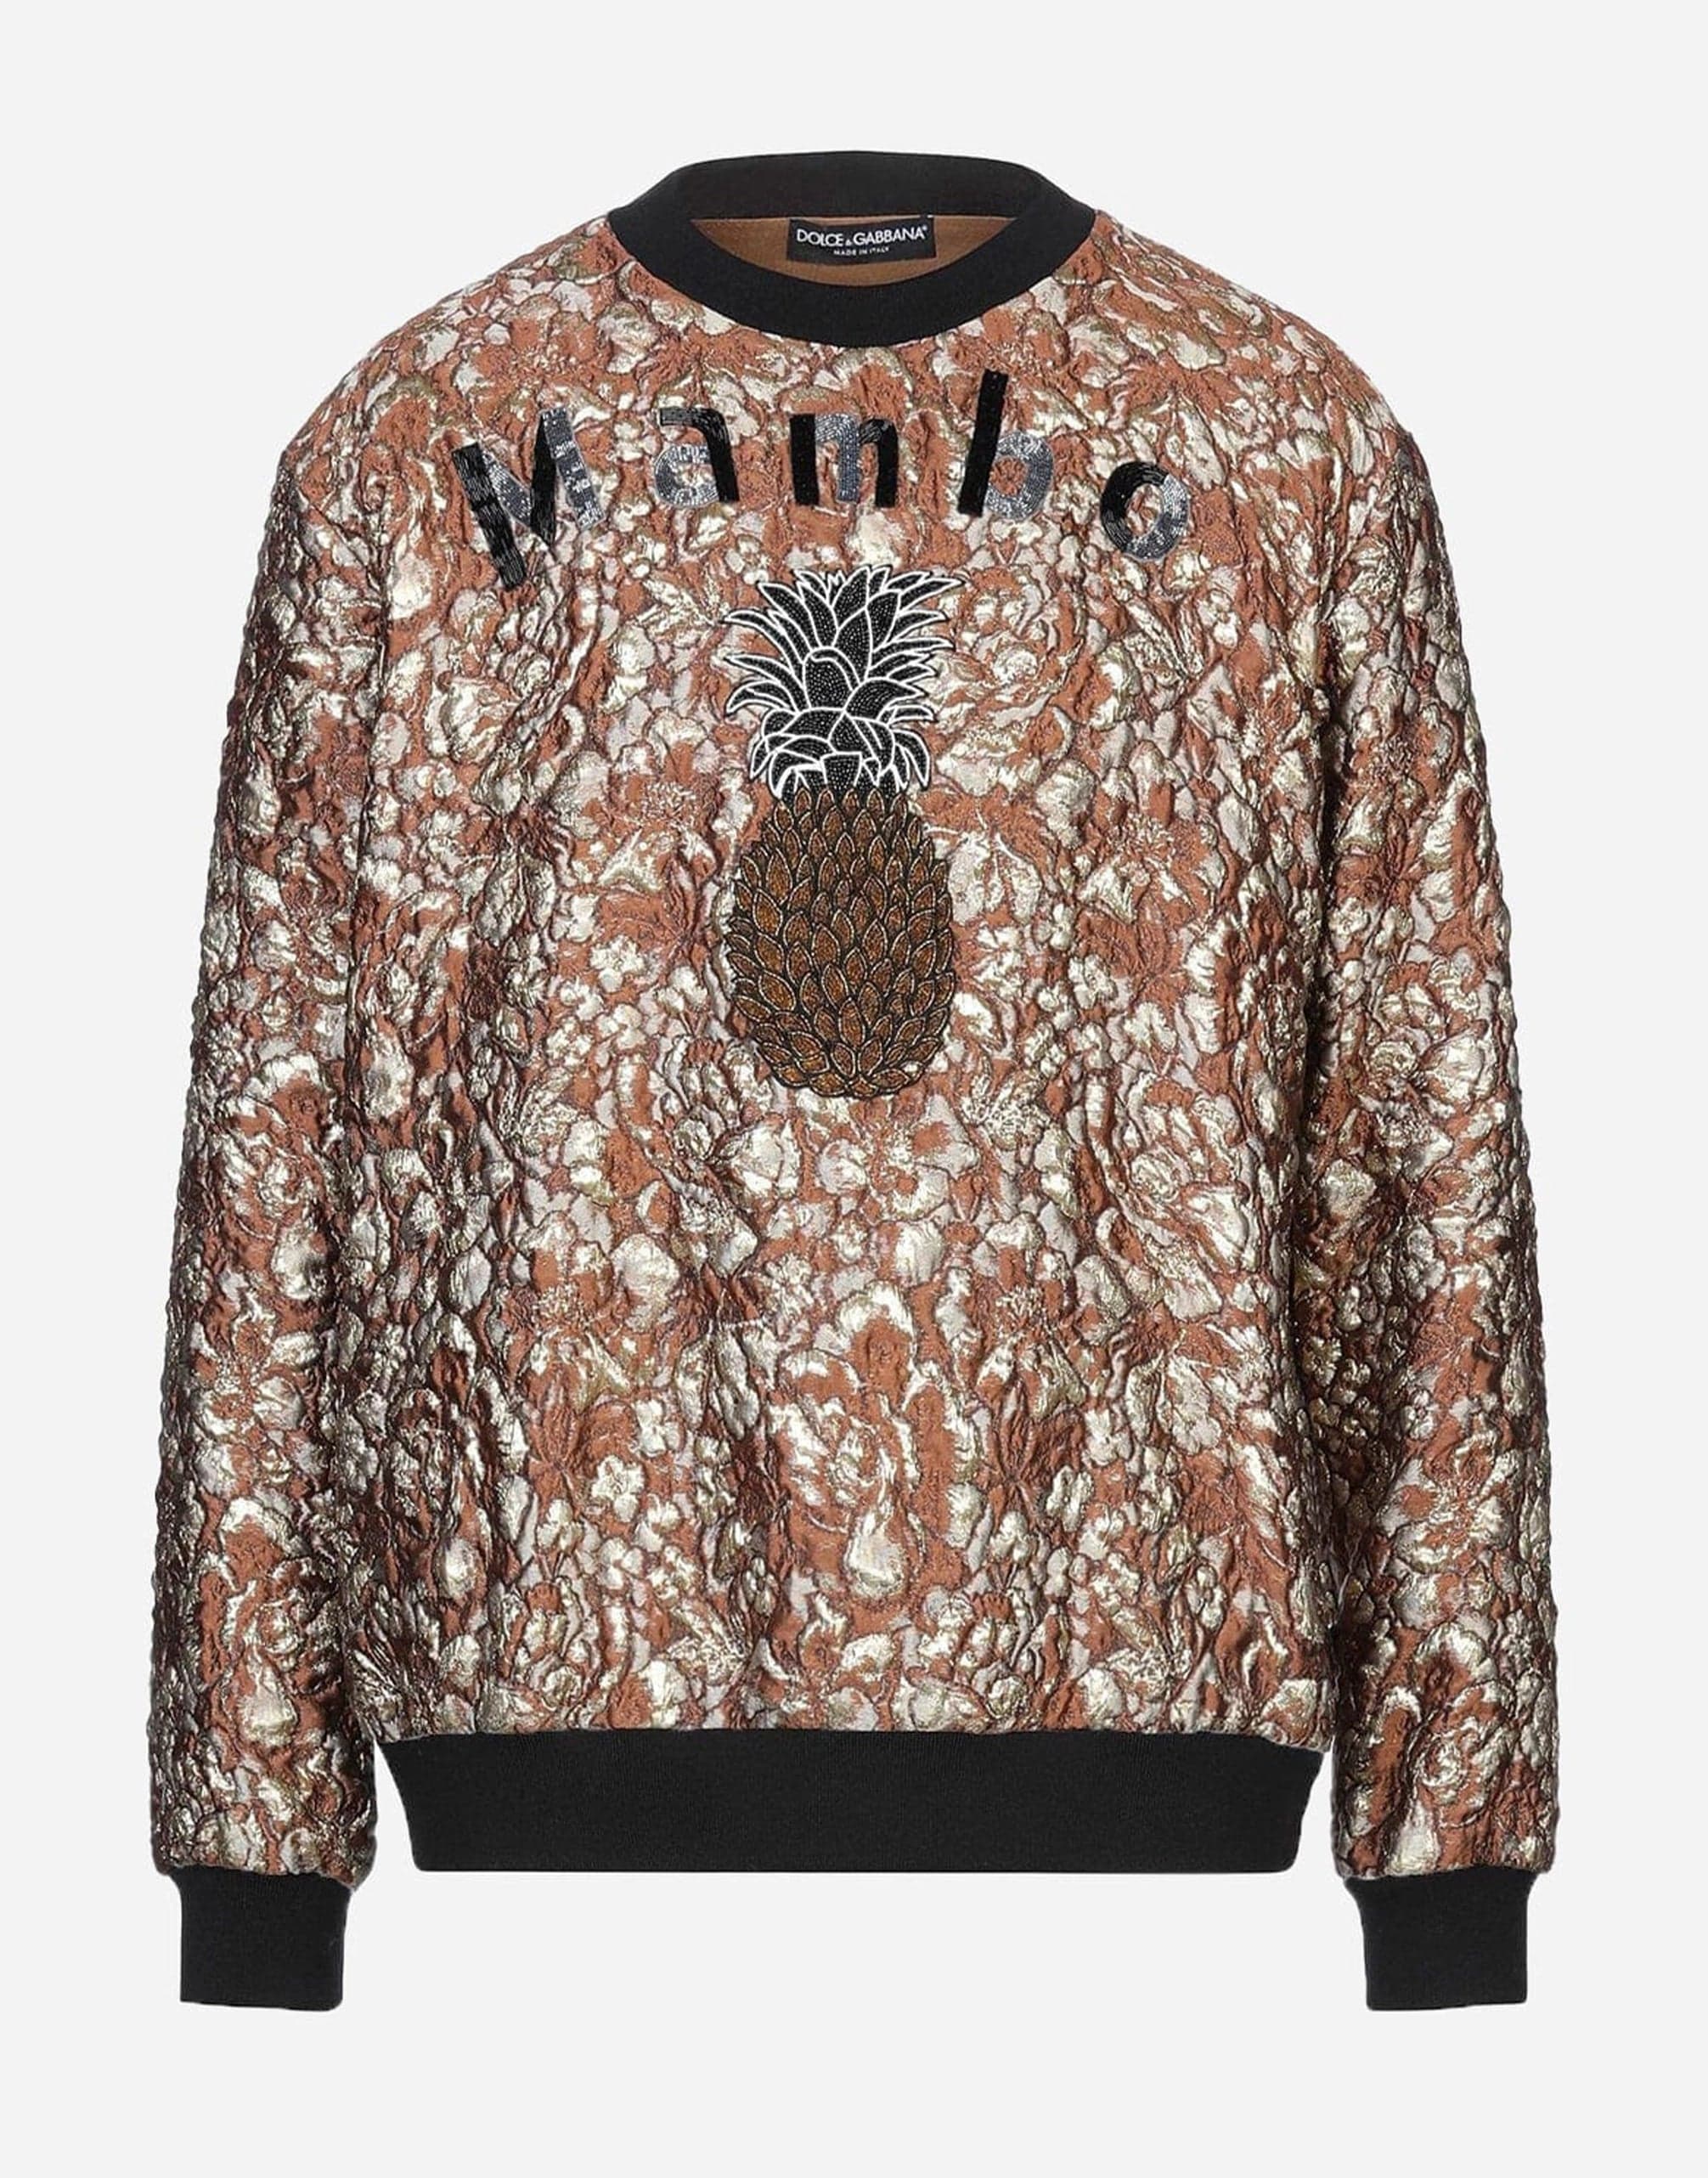 Dolce & Gabbana Jacquard Pineapple-Embellished Sweatshirt